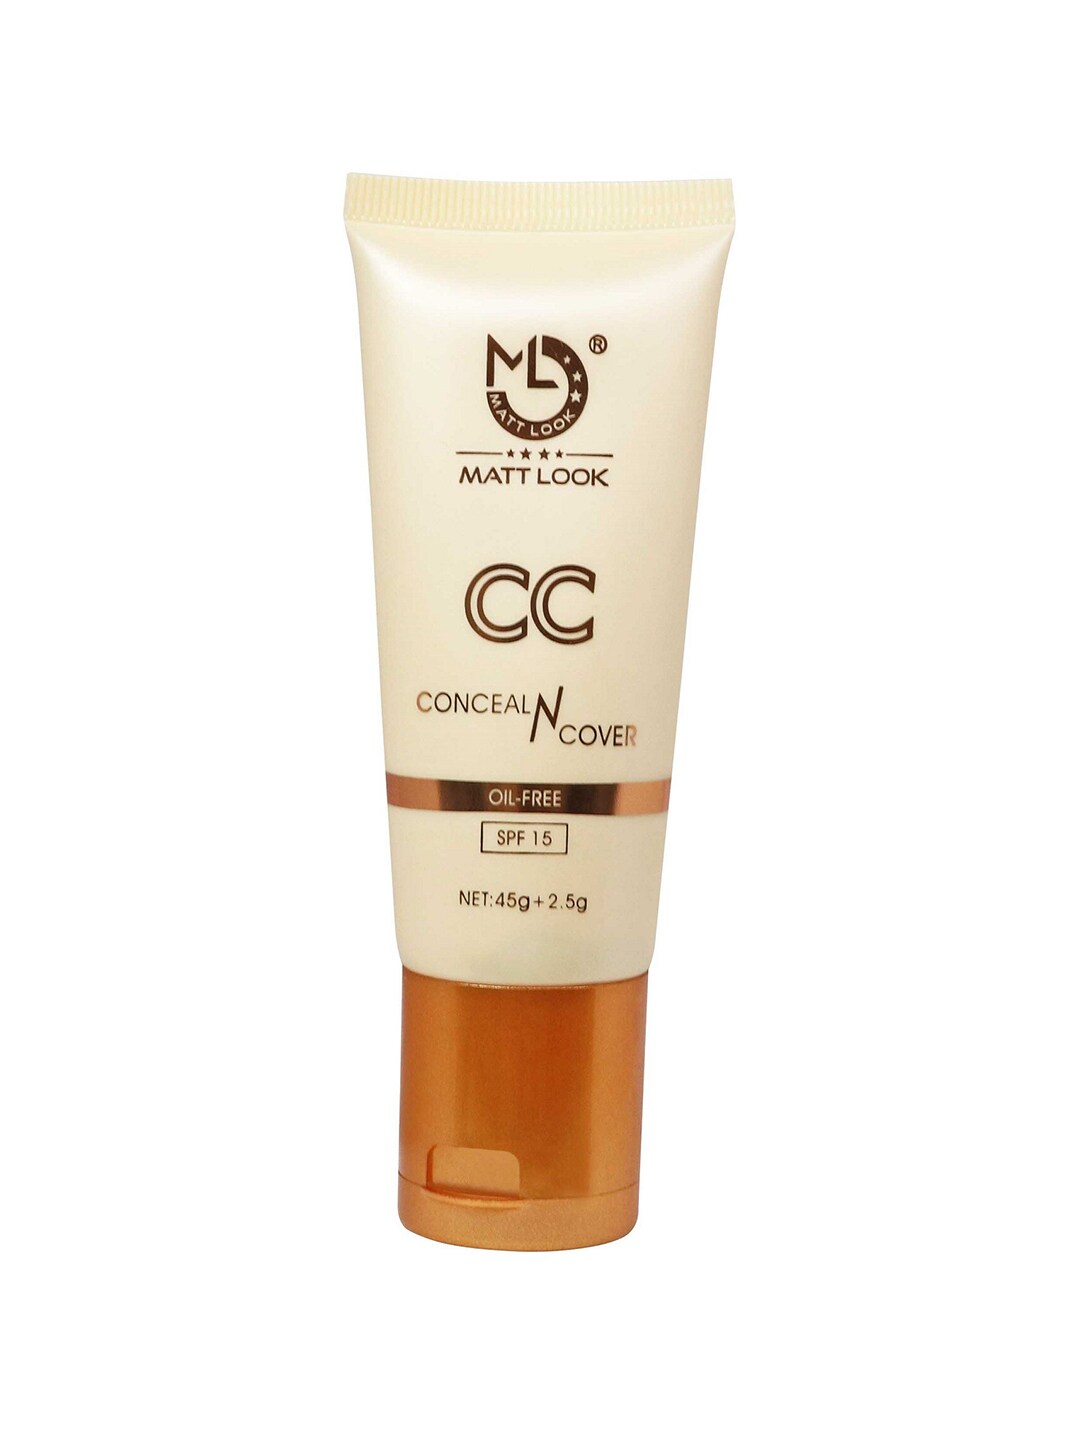 MATTLOOK Beige CC Conceal N Cover Oil-Free SPF-15 Cream Price in India